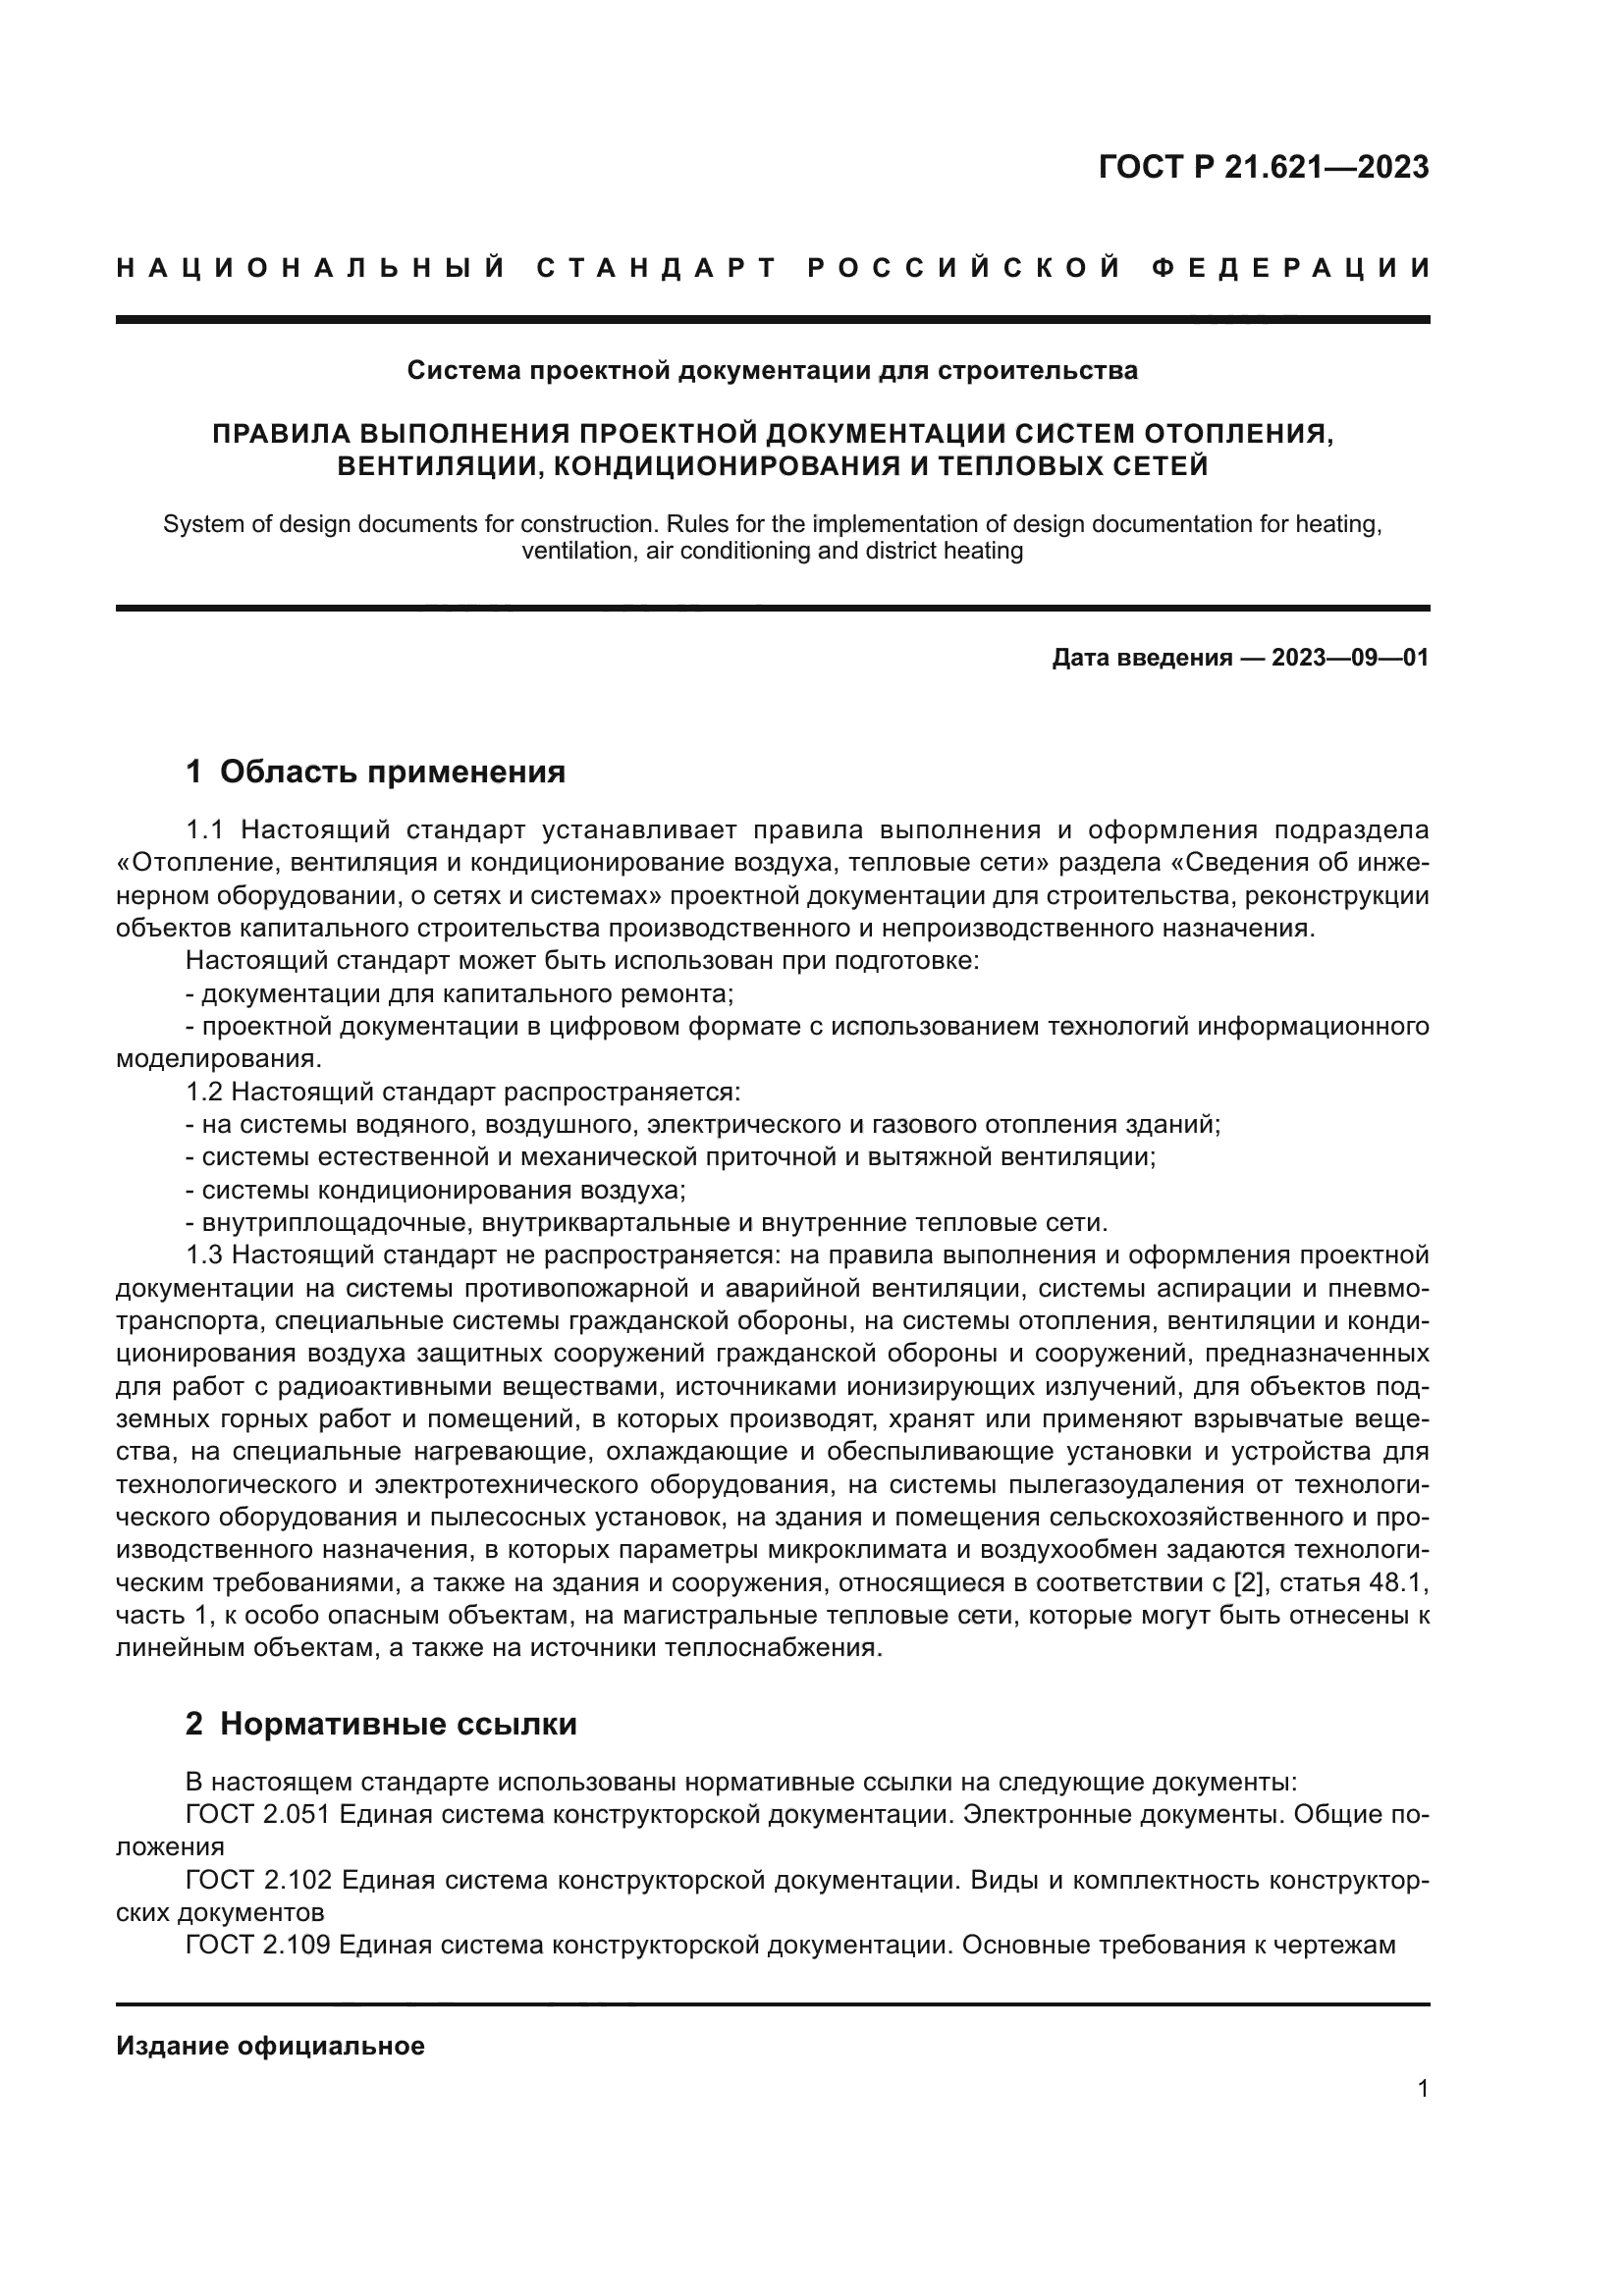 ГОСТ Р 21.621-2023